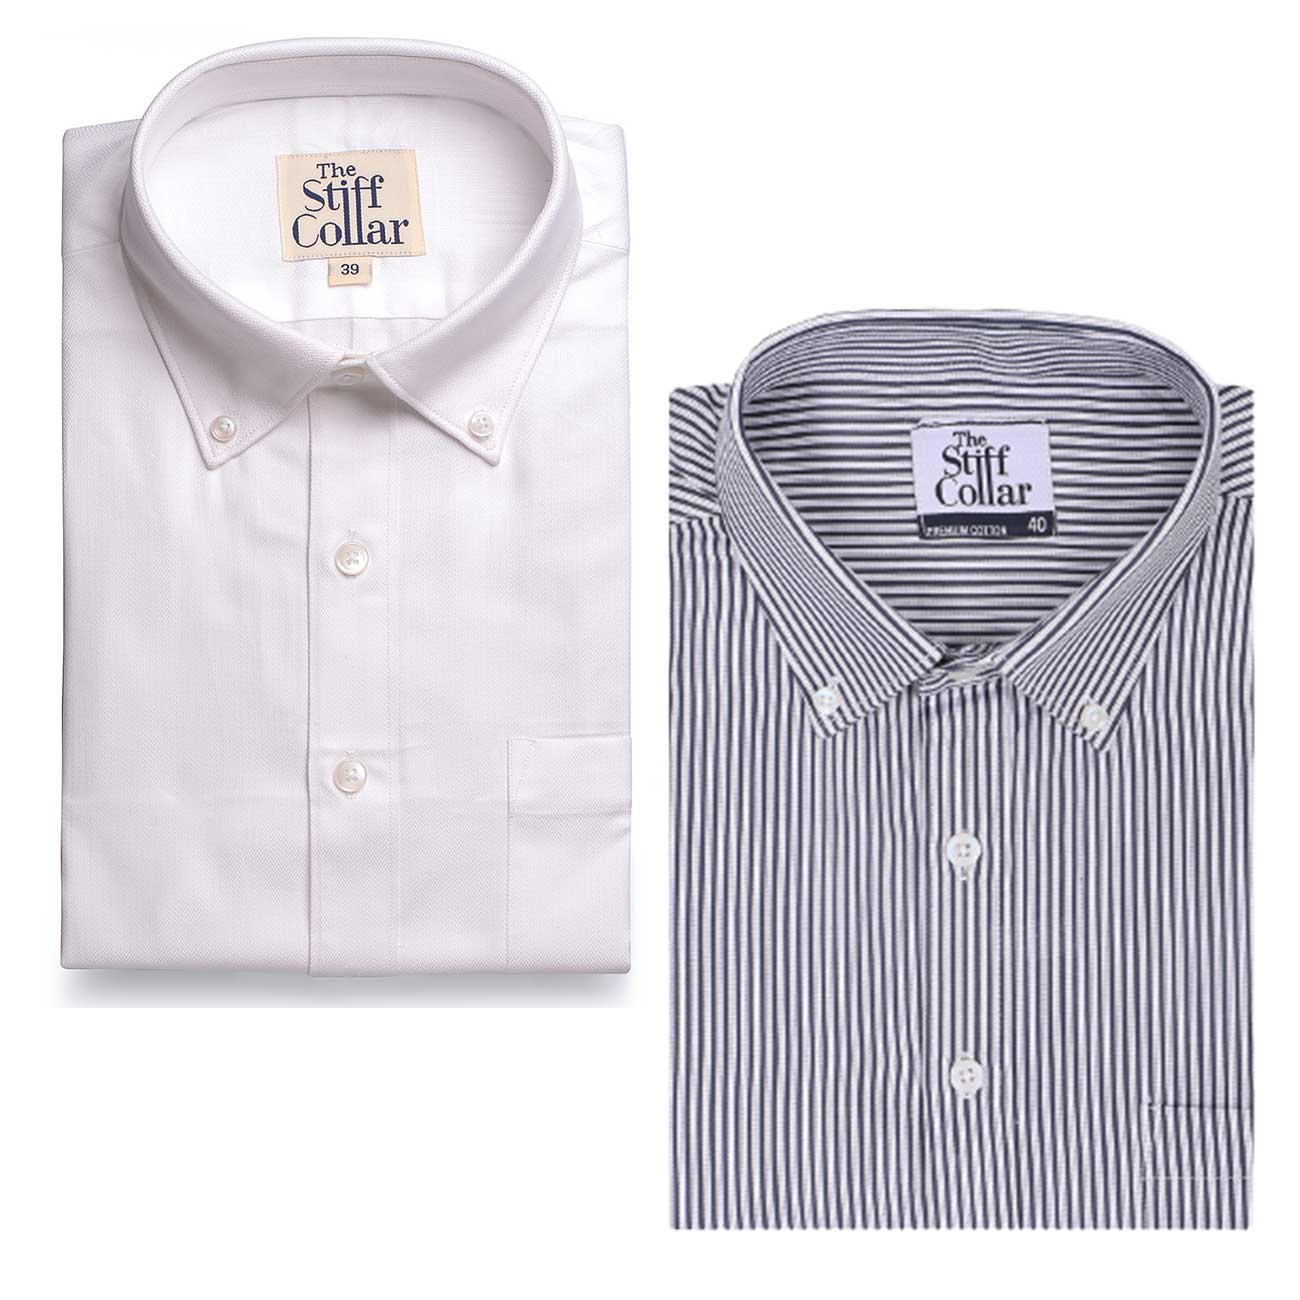 Premium White Herringbone And French Navy Stripes Button Down Collar Cotton Shirt Combo